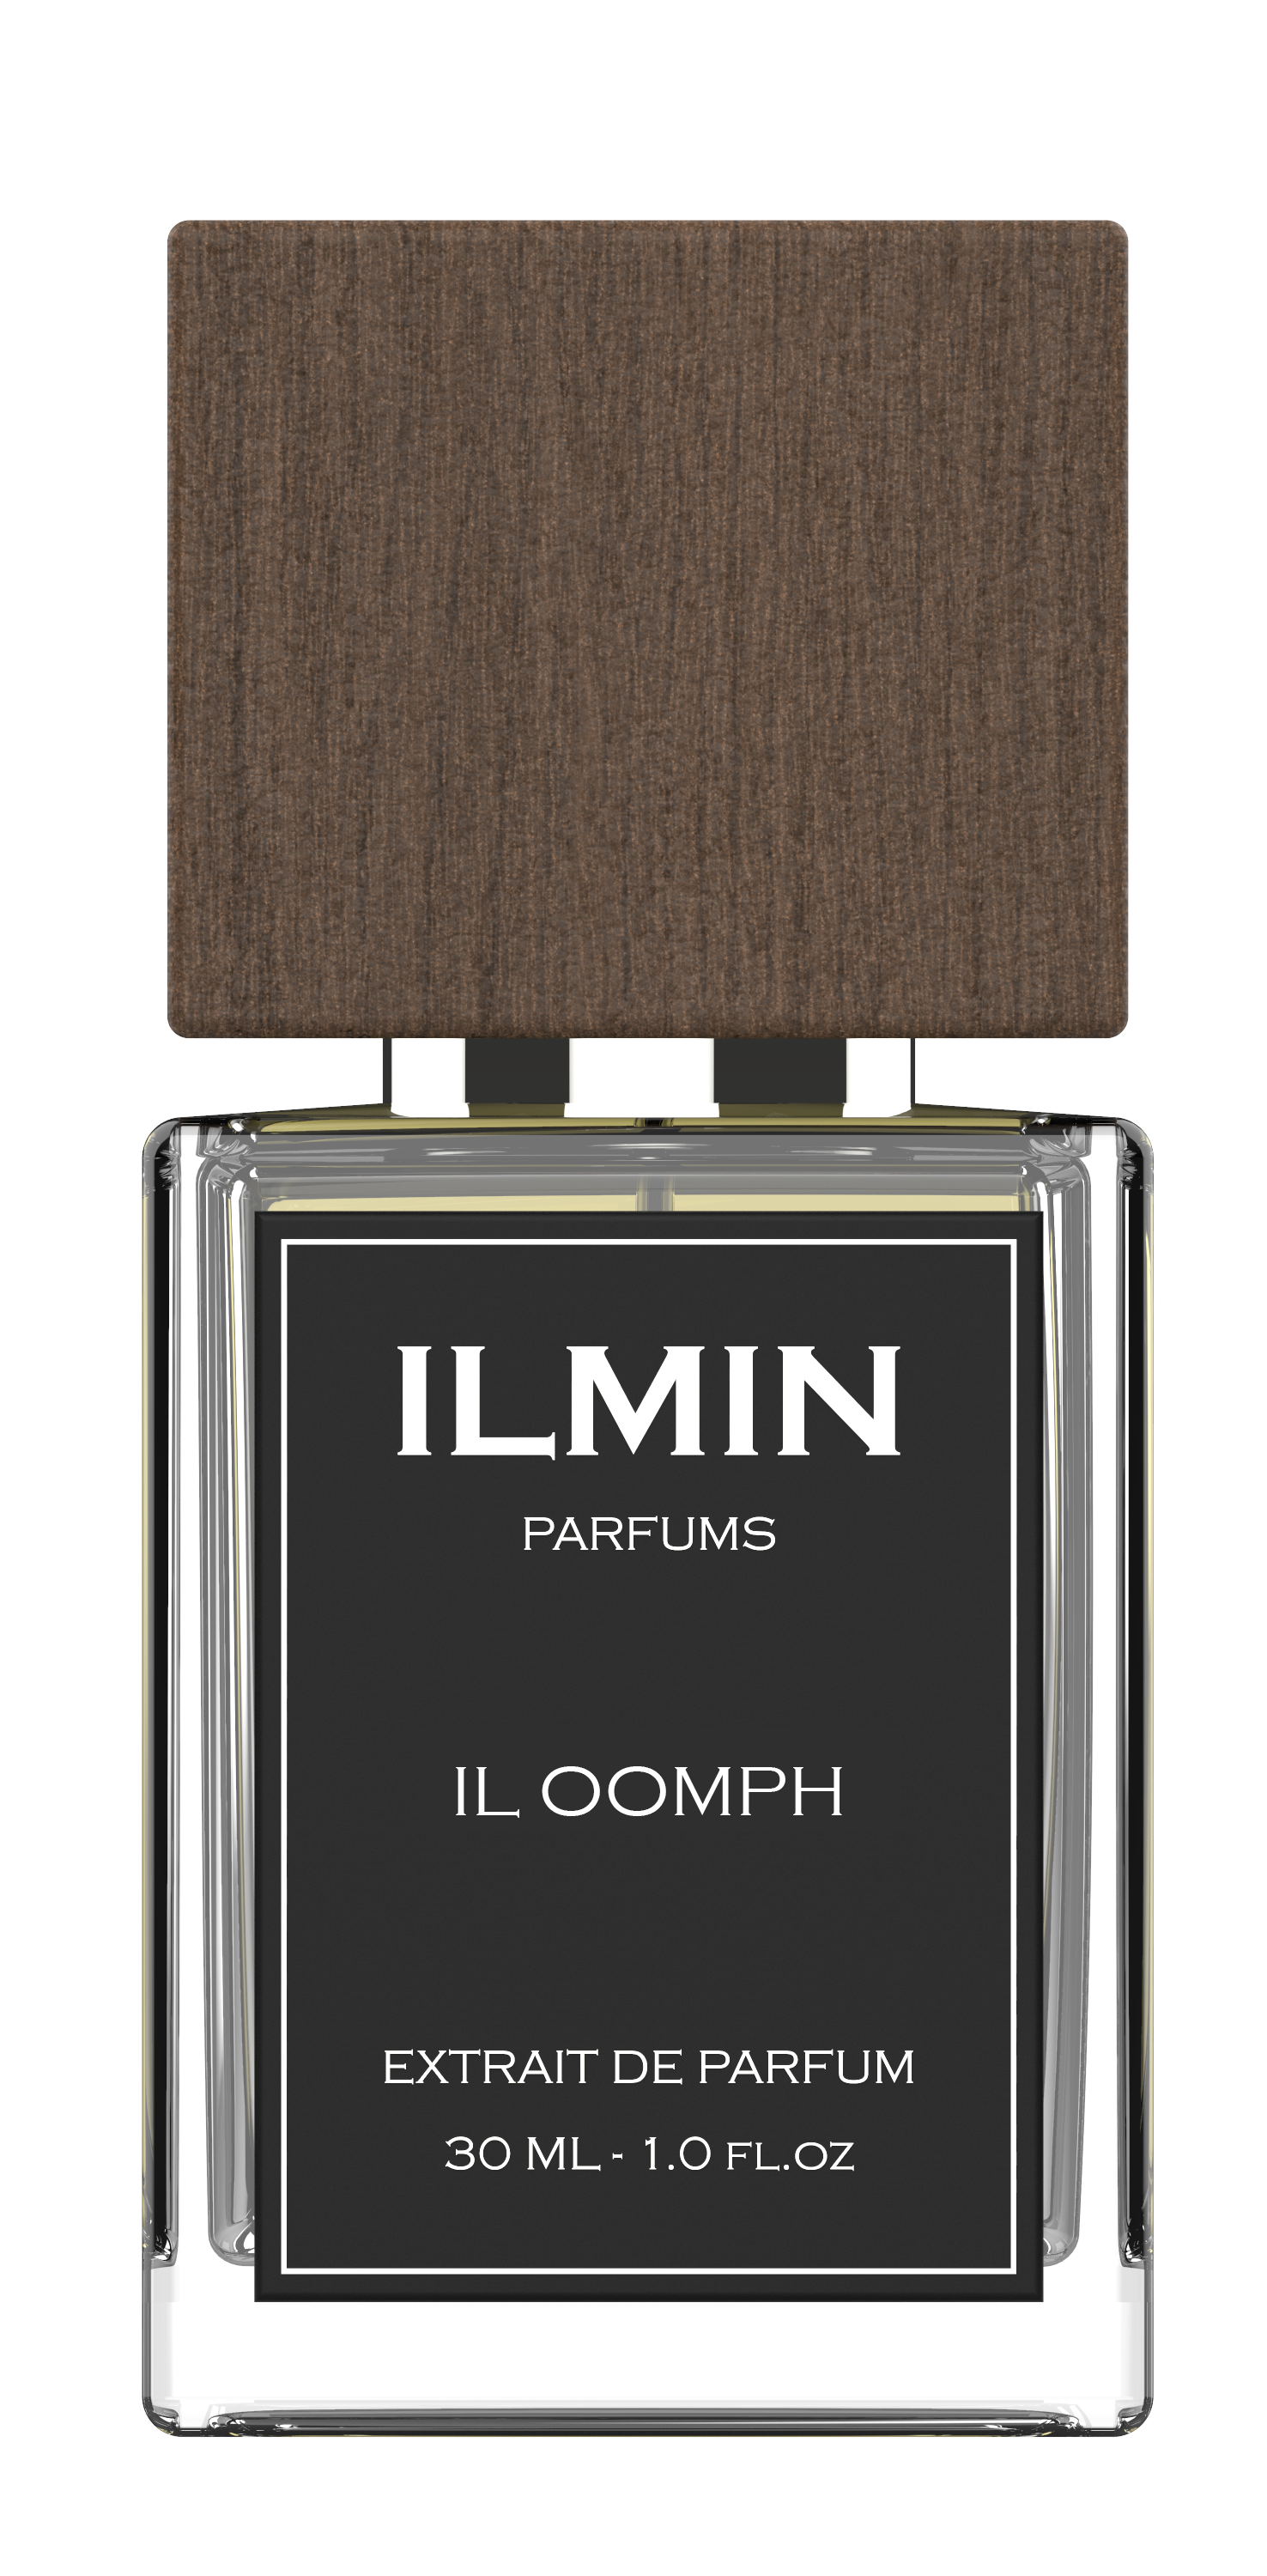 ILMIN Parfums IL OOMPH Extrait De Parfum Spray 1oz / 30ml – ILMIN USA  OFFICIAL